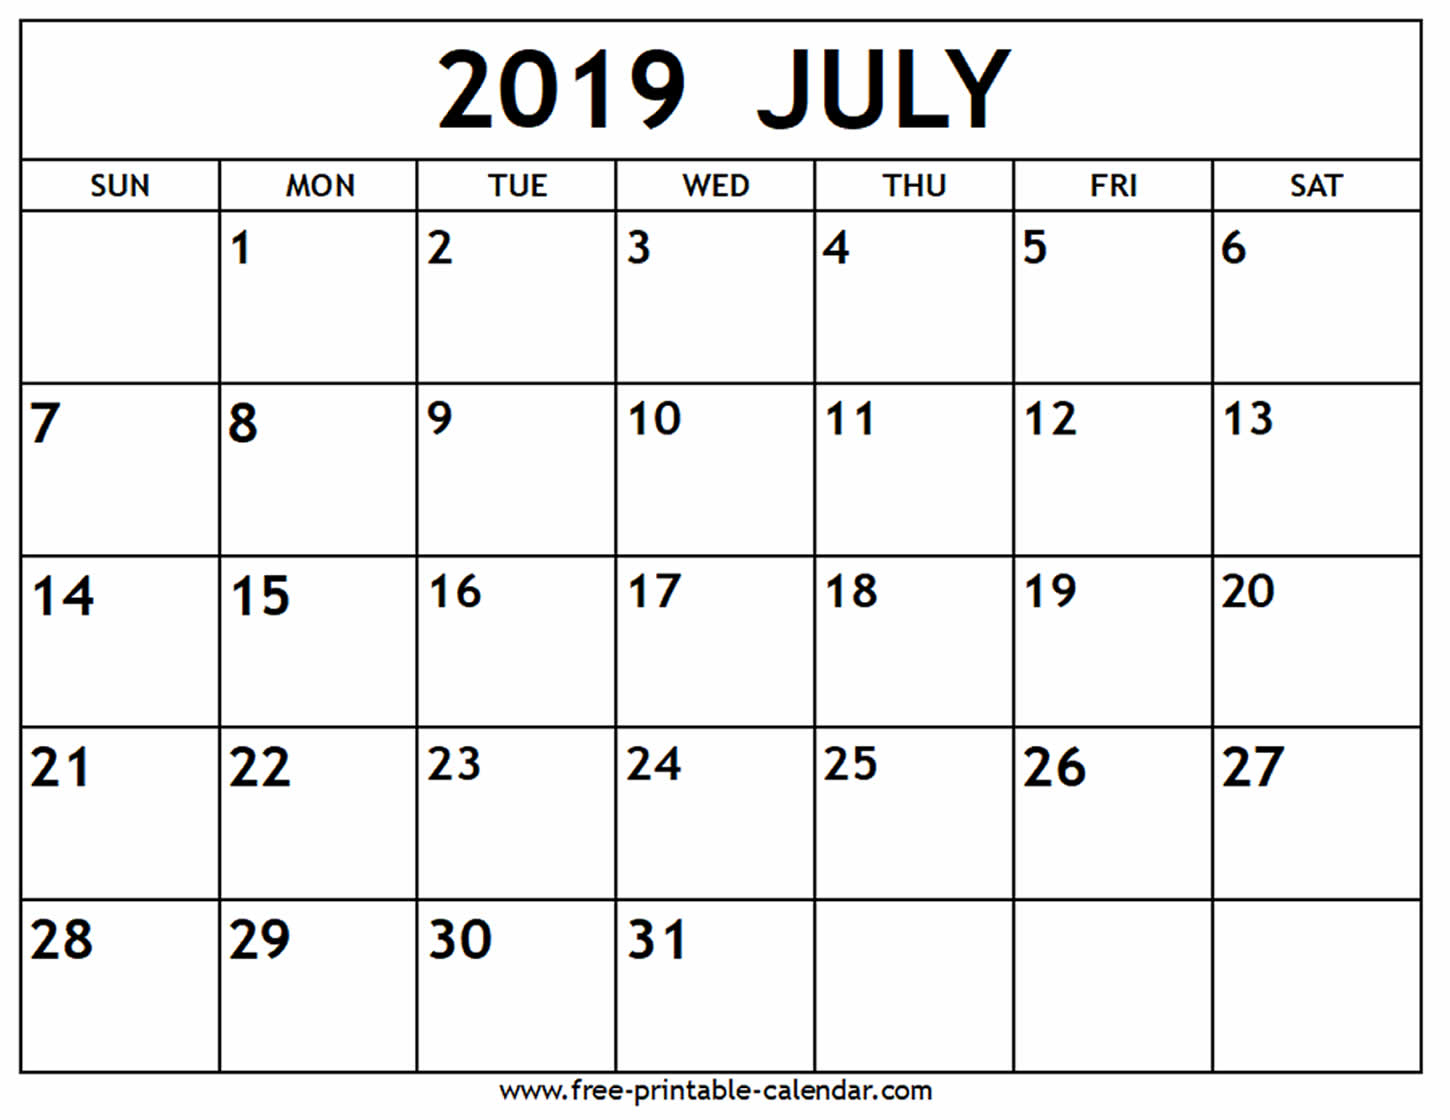 July 2019 Calendar - Free-Printable-Calendar